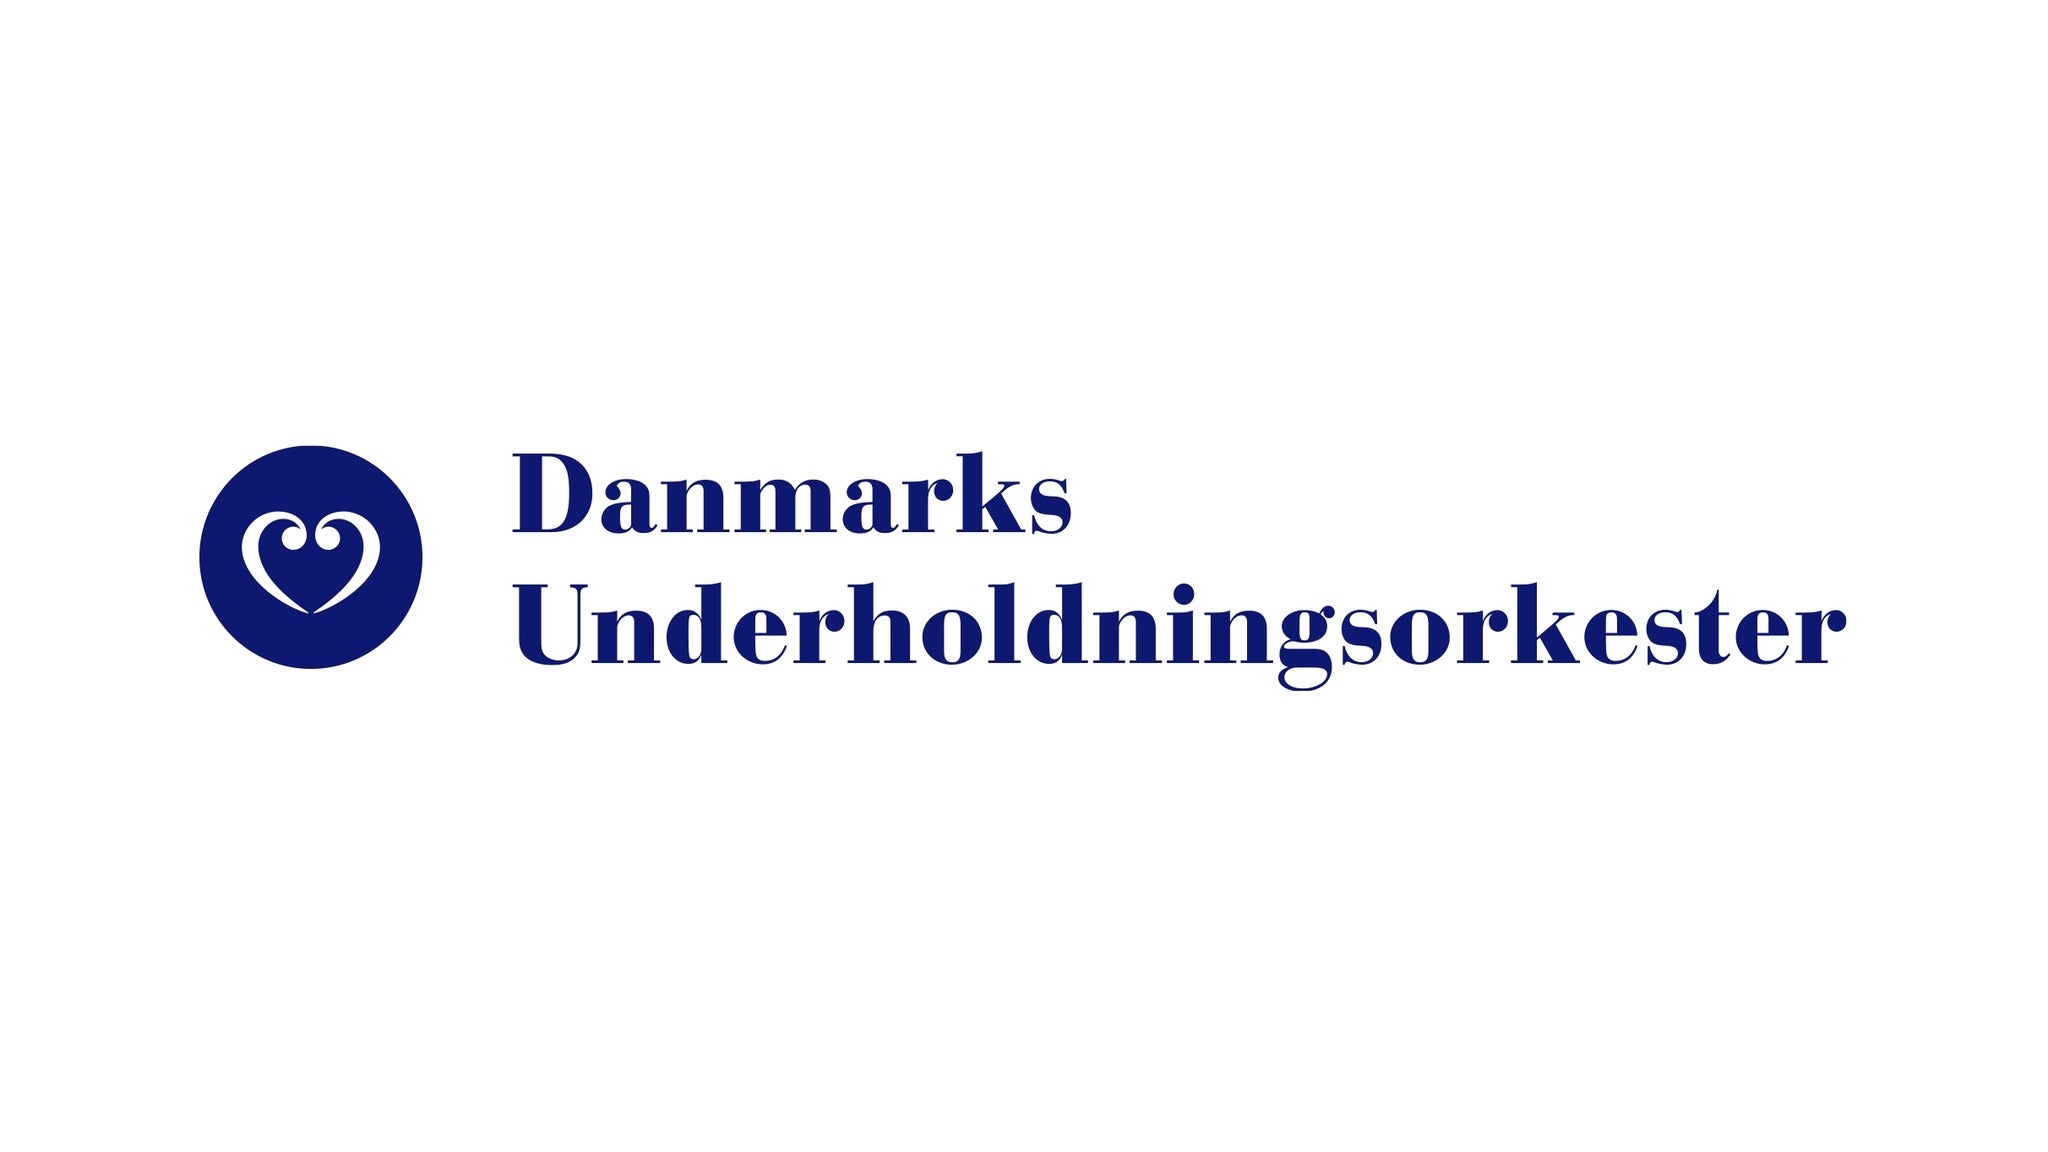 Danmarks Underholdningsorkester presale information on freepresalepasswords.com